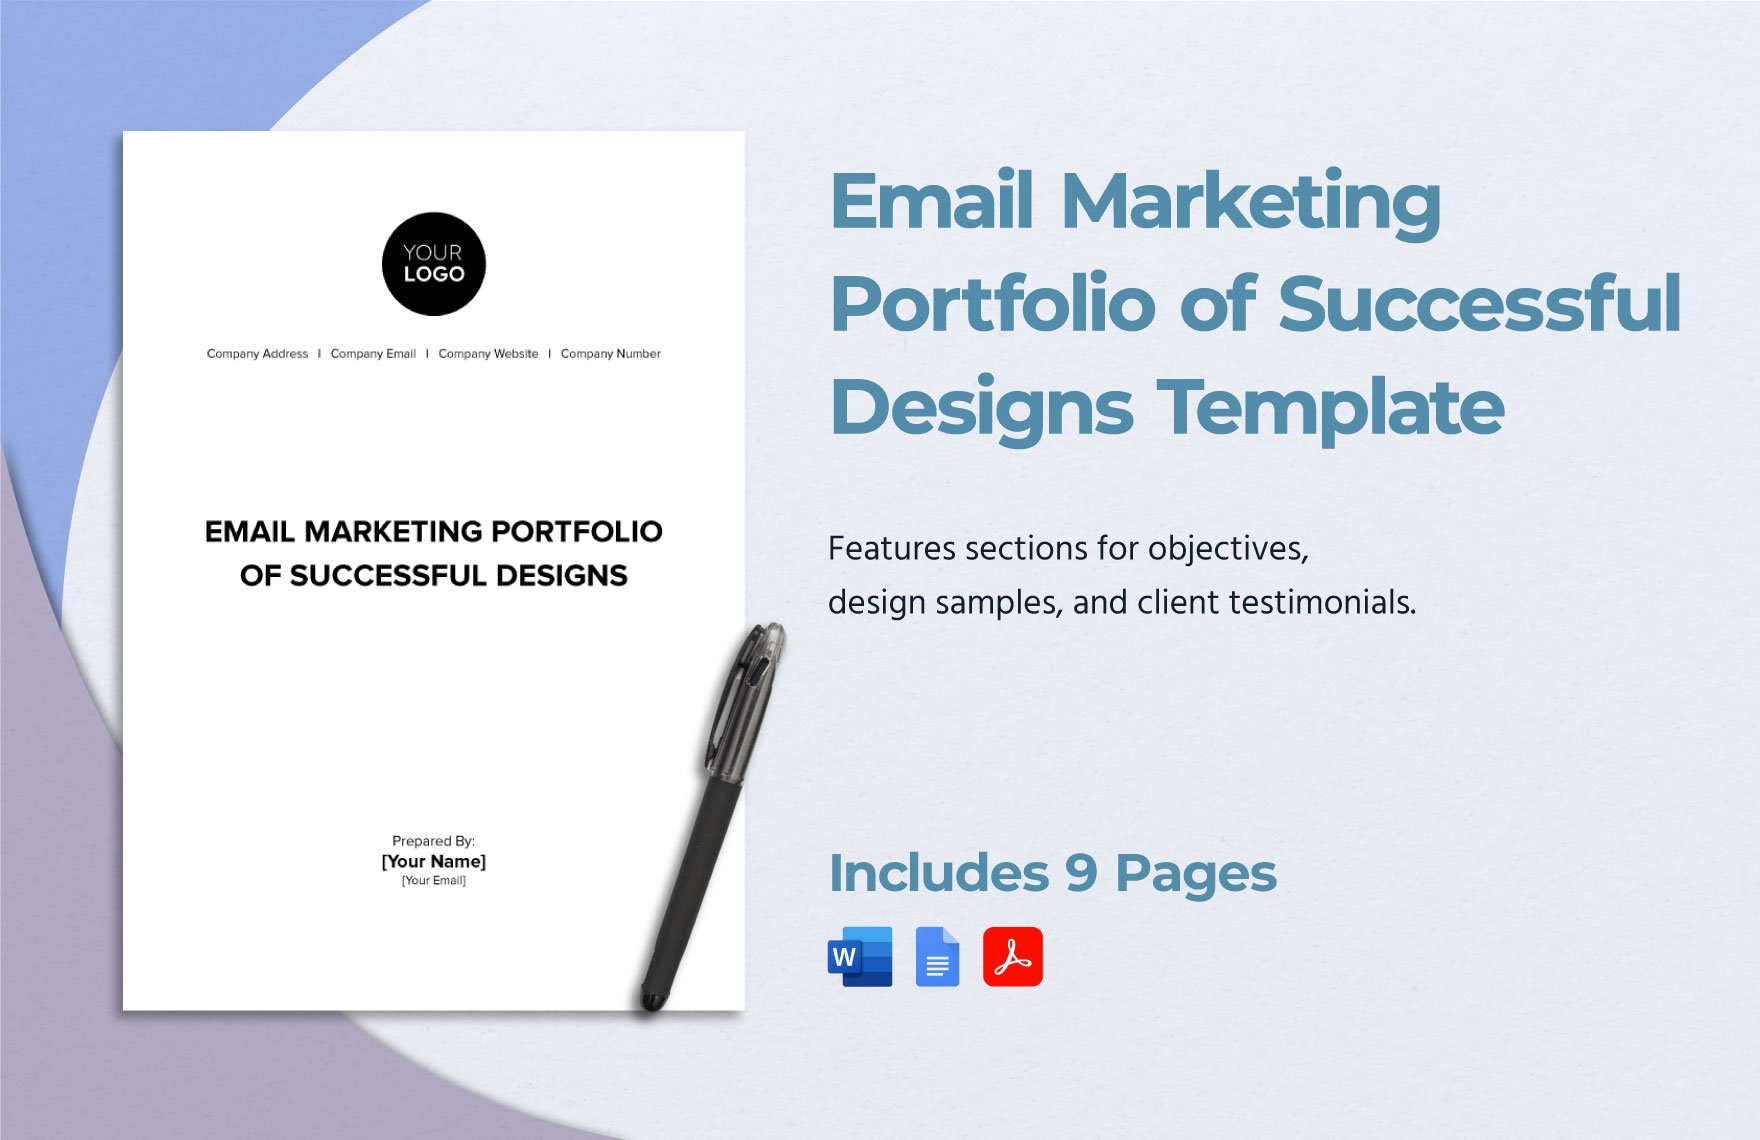 Email Marketing Portfolio of Successful Designs Template